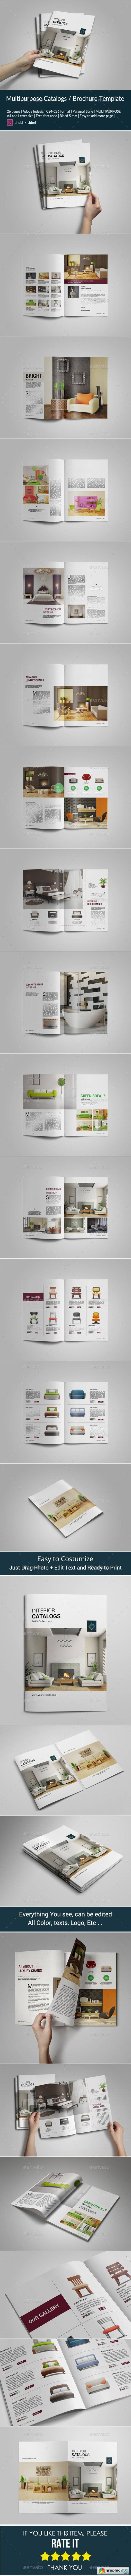 Multipurpose Catalogs / Brochure